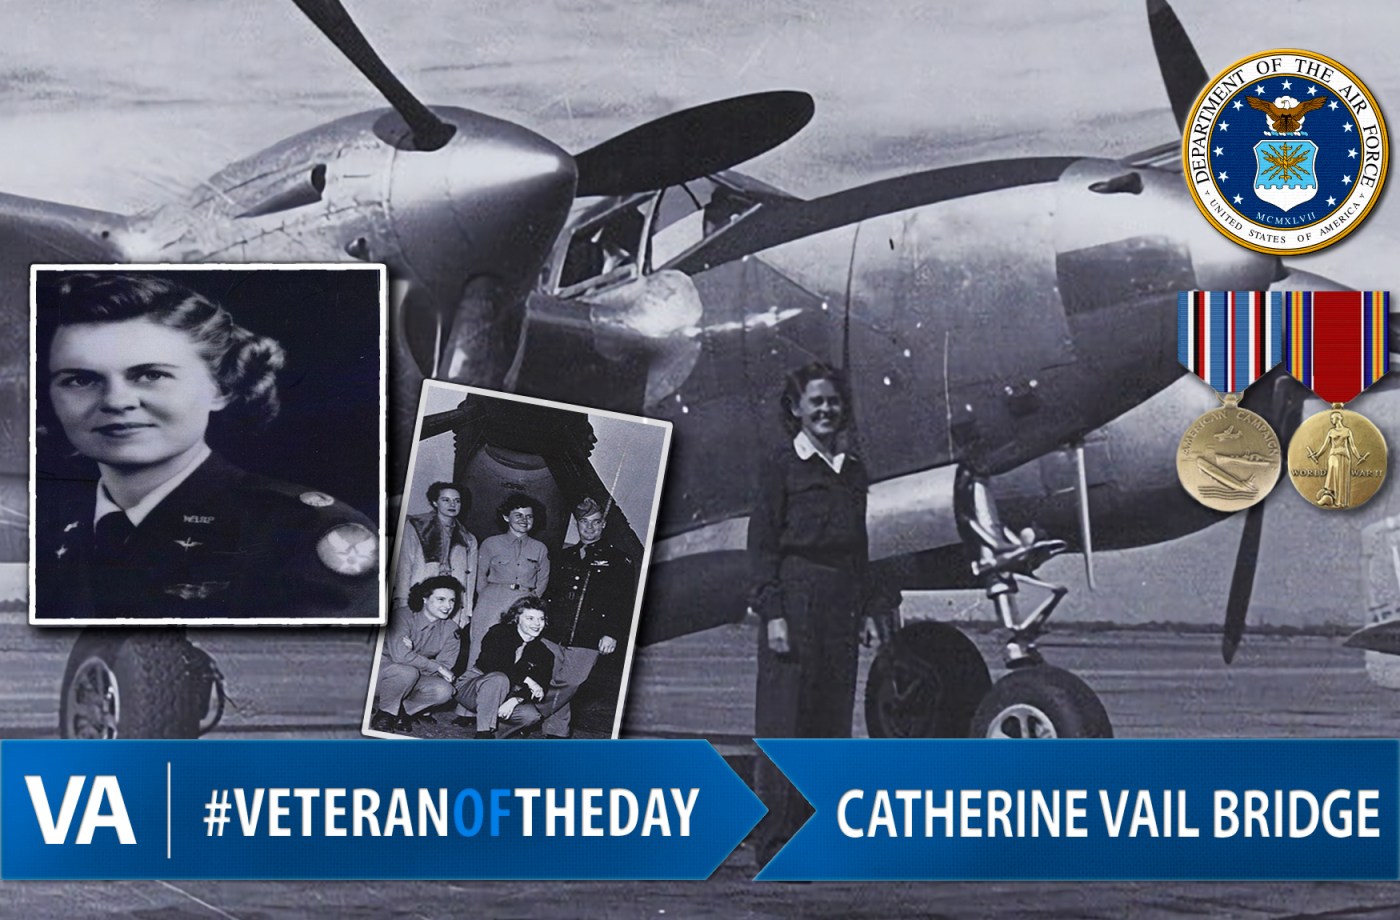 Catherine Vail Bridge - Veteran of the Day